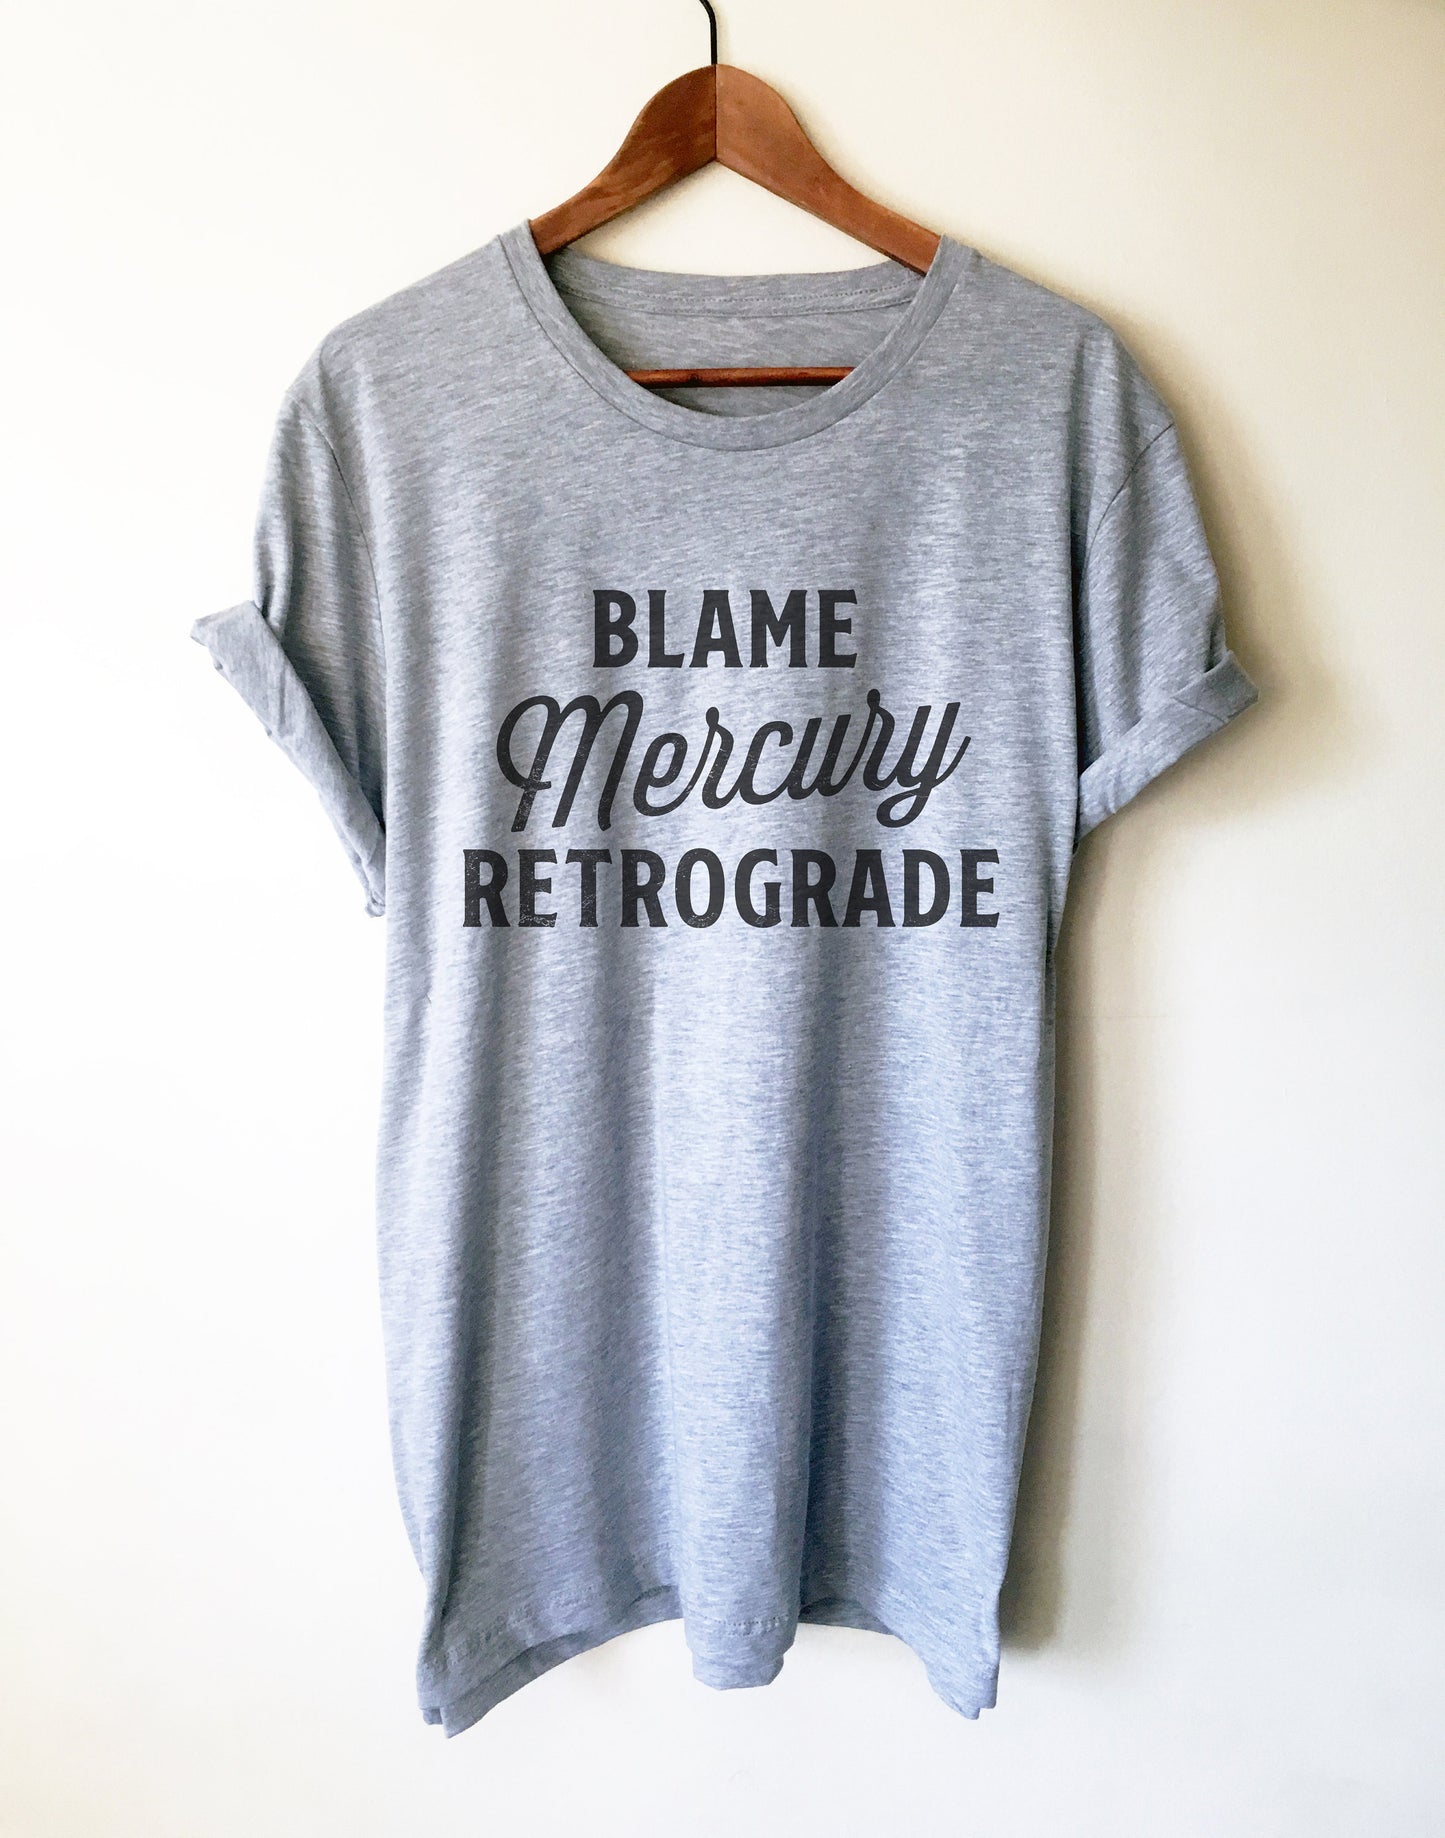 Blame Mercury Retrograde Unisex Shirt -Astrology Shirt, Astrology Gifts, Constellation, Astronomy Gifts, Horoscope, Zodiac Sign, Zodiac Gift